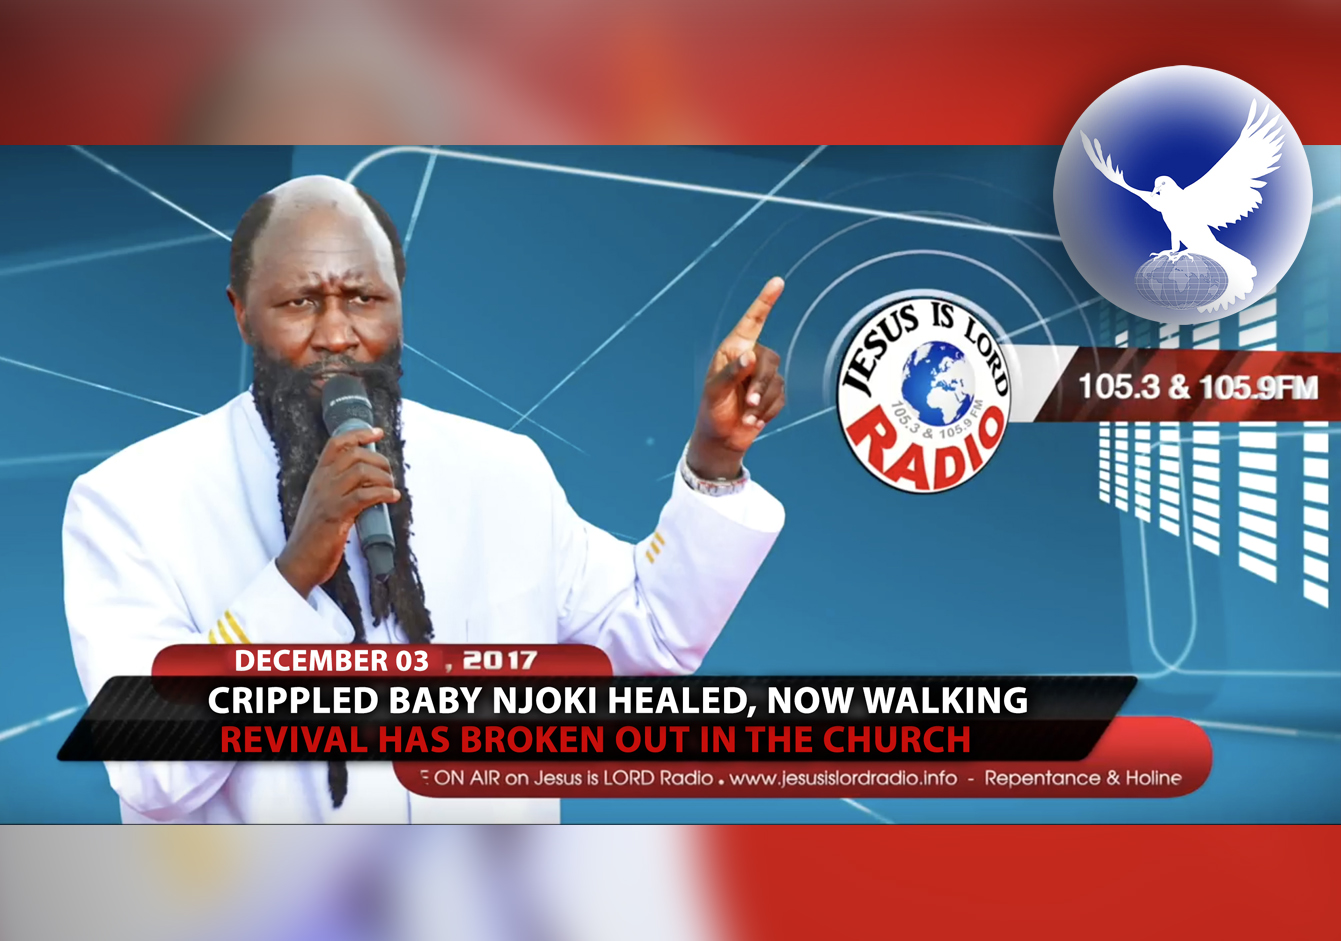 EPISODE 57 - Crippled Baby Njoki Healed Today, Now Walking (03Dec2017) - Prophet Dr. Owuor